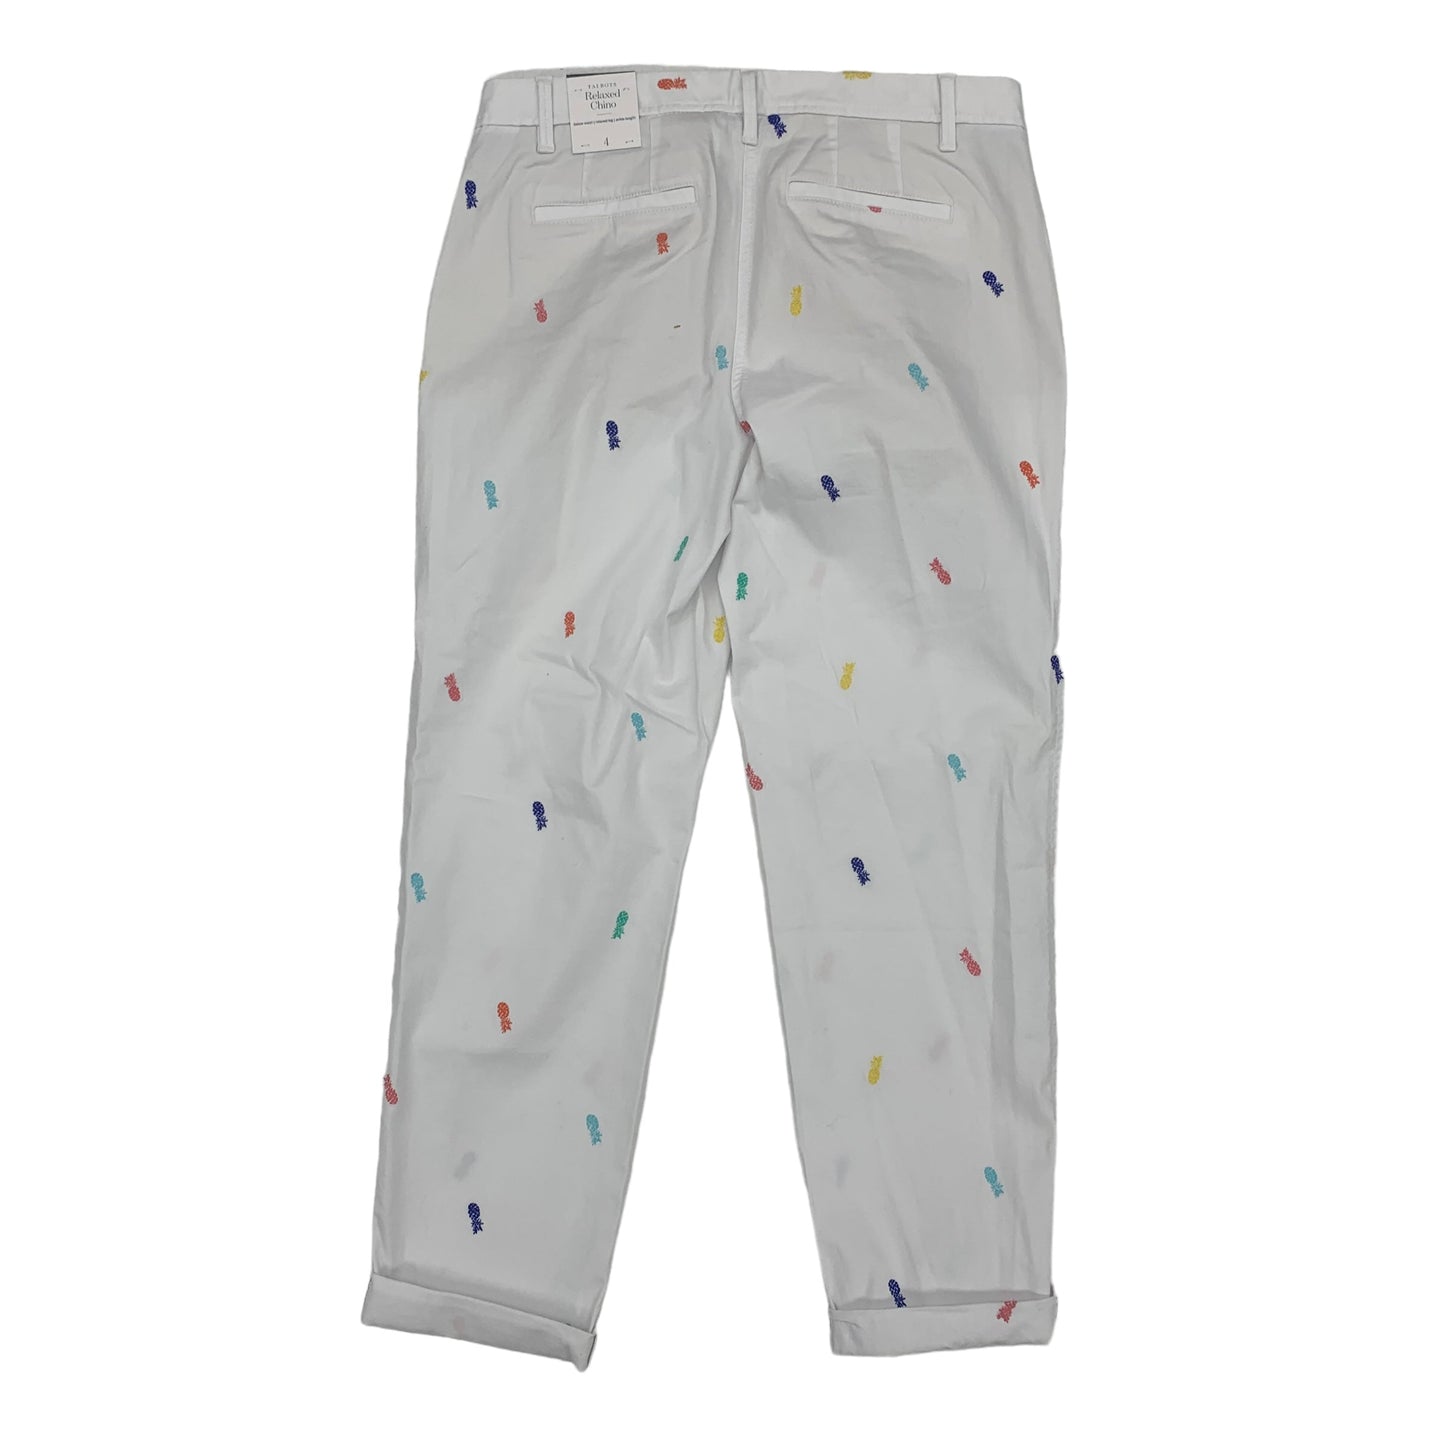 Pants Chinos & Khakis By Talbots  Size: 4